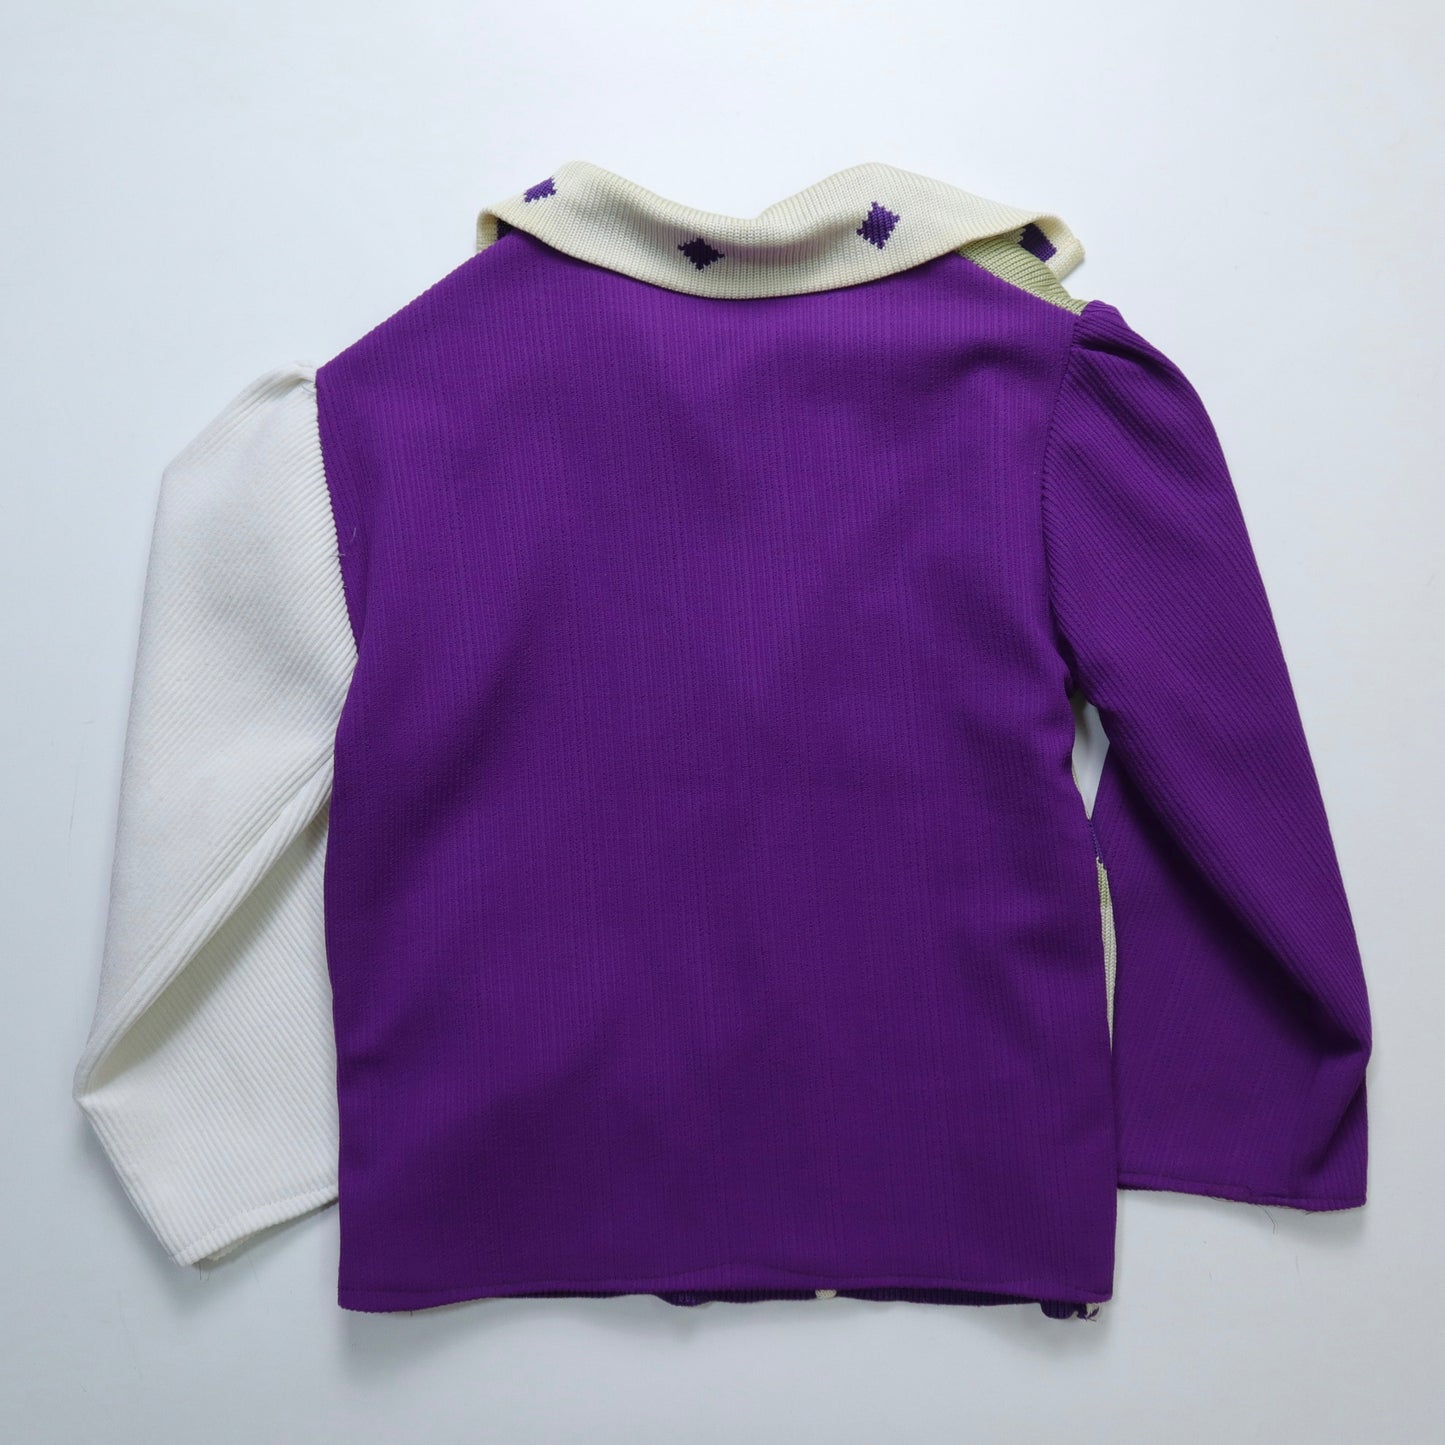 70-80s purple geometric totem knitted blouse